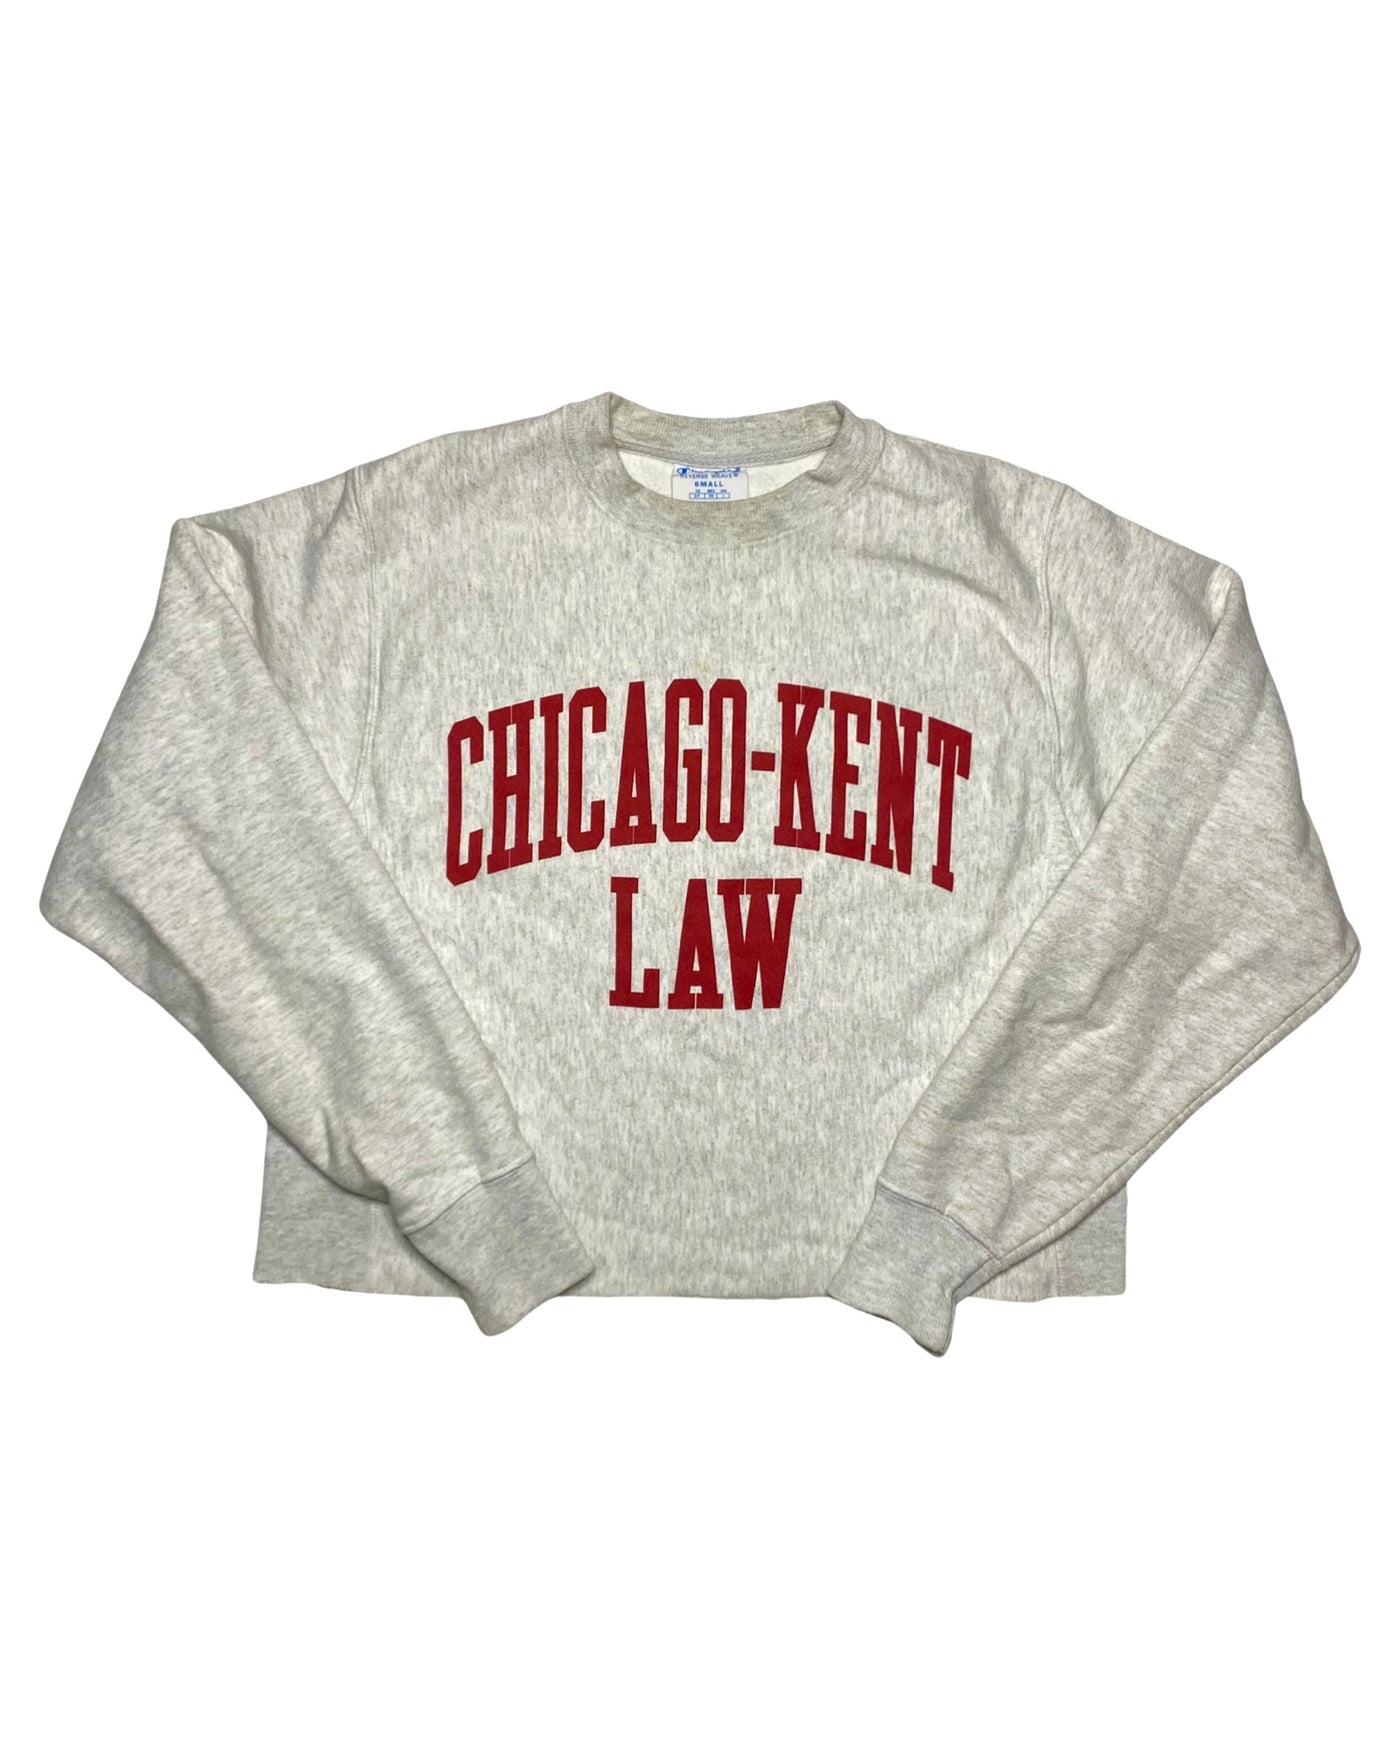 Champion Chicago-Kent Law Cropped Crewneck